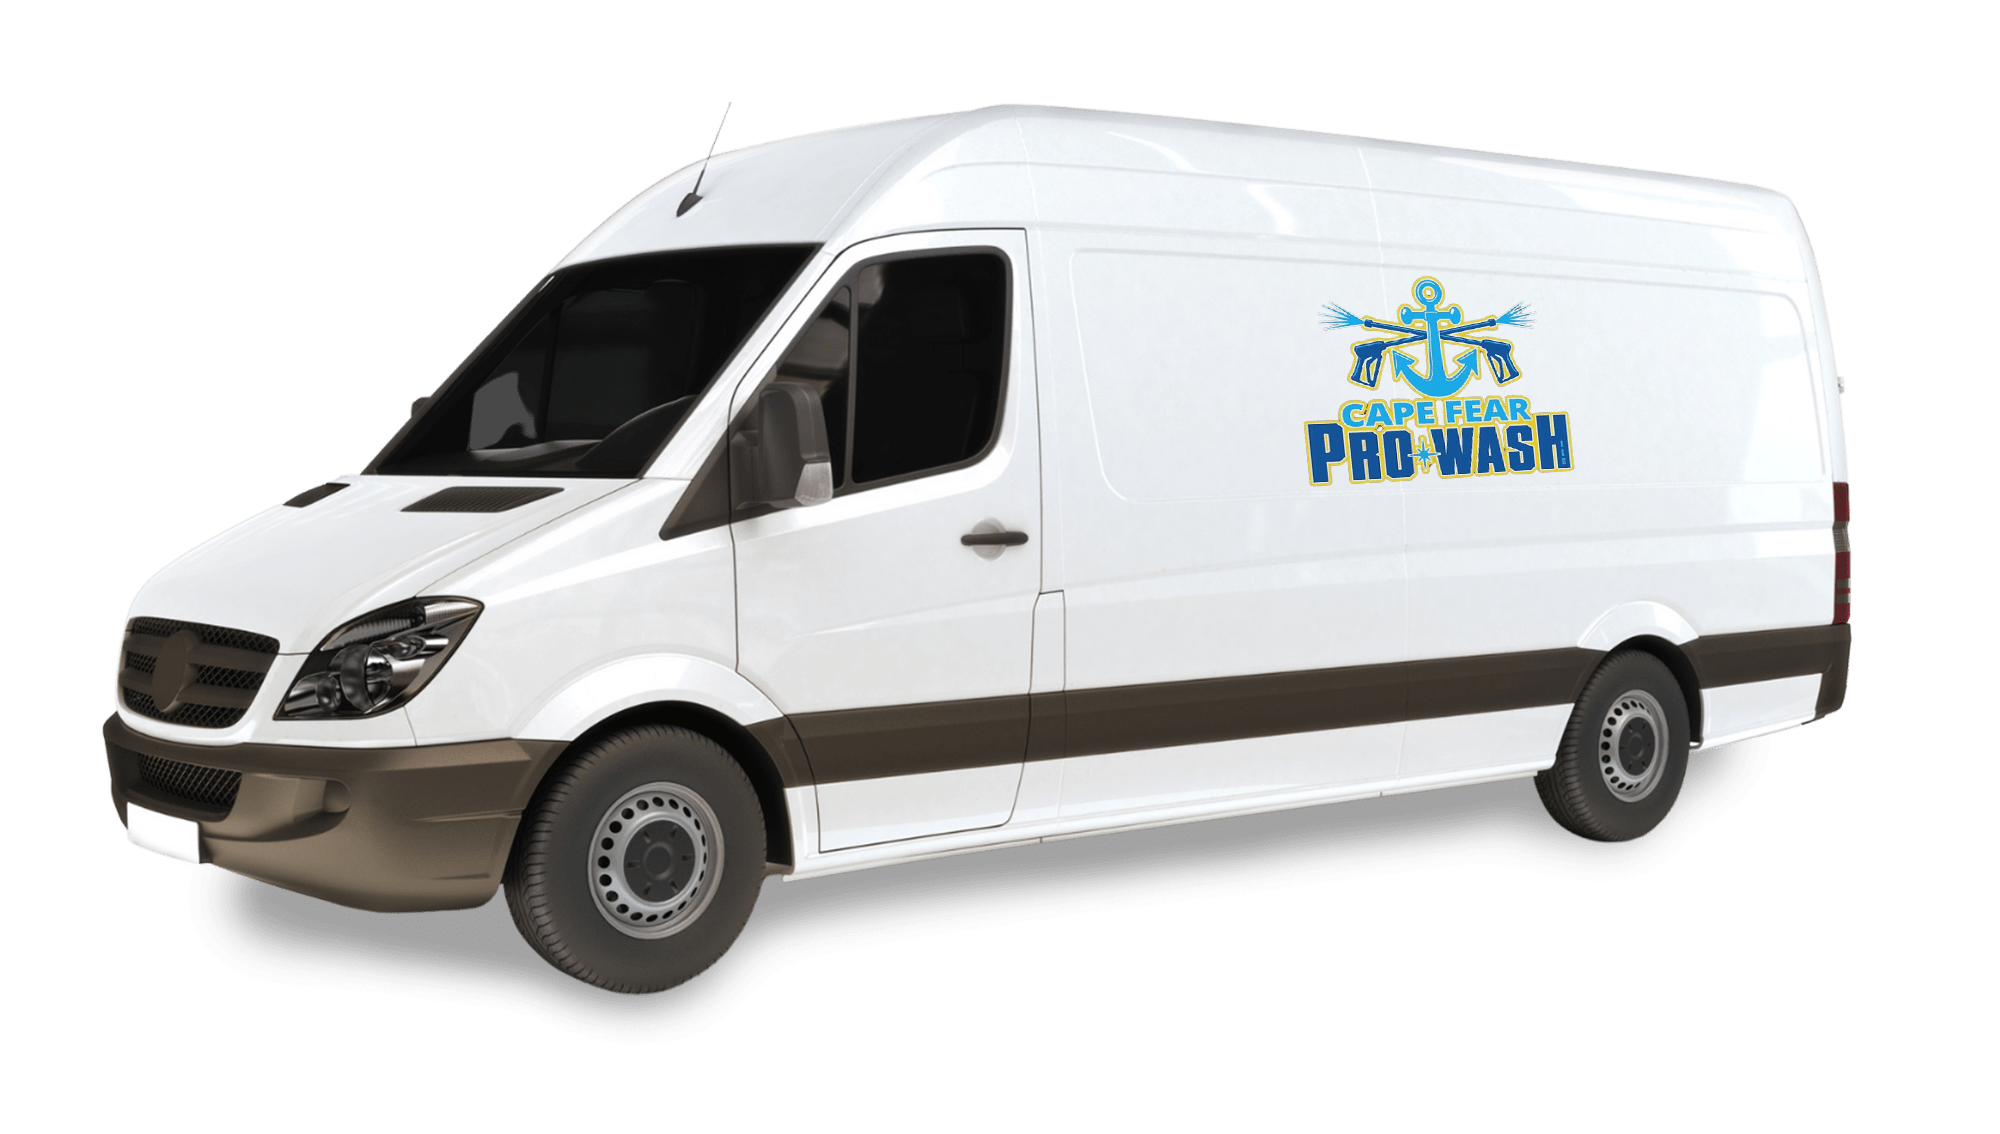 Cape Fear Pro Wash Pressure Washing Van